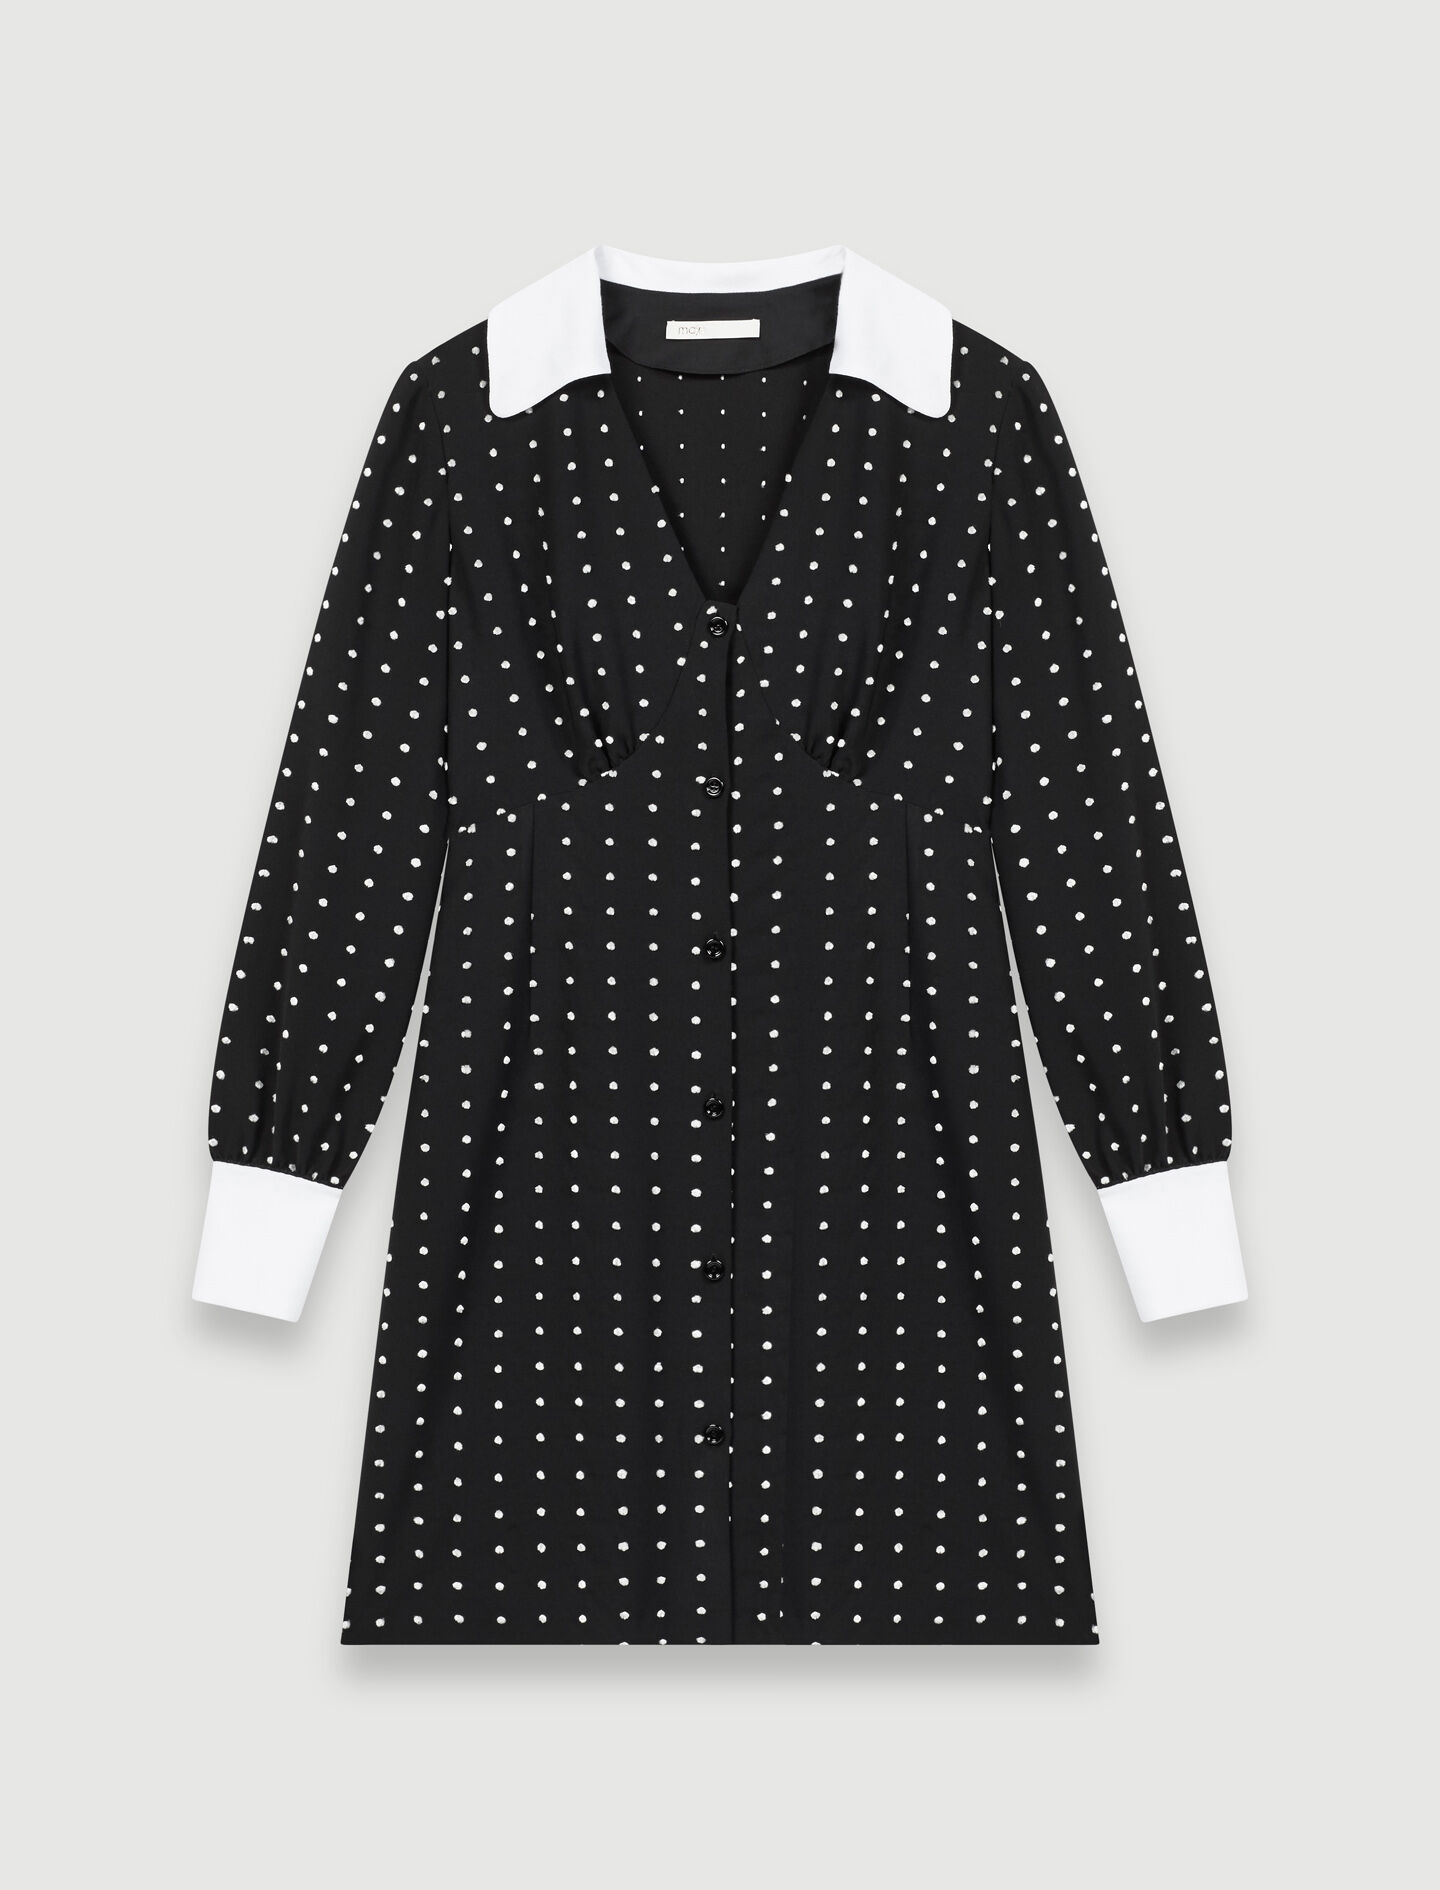 polka dots dress designs